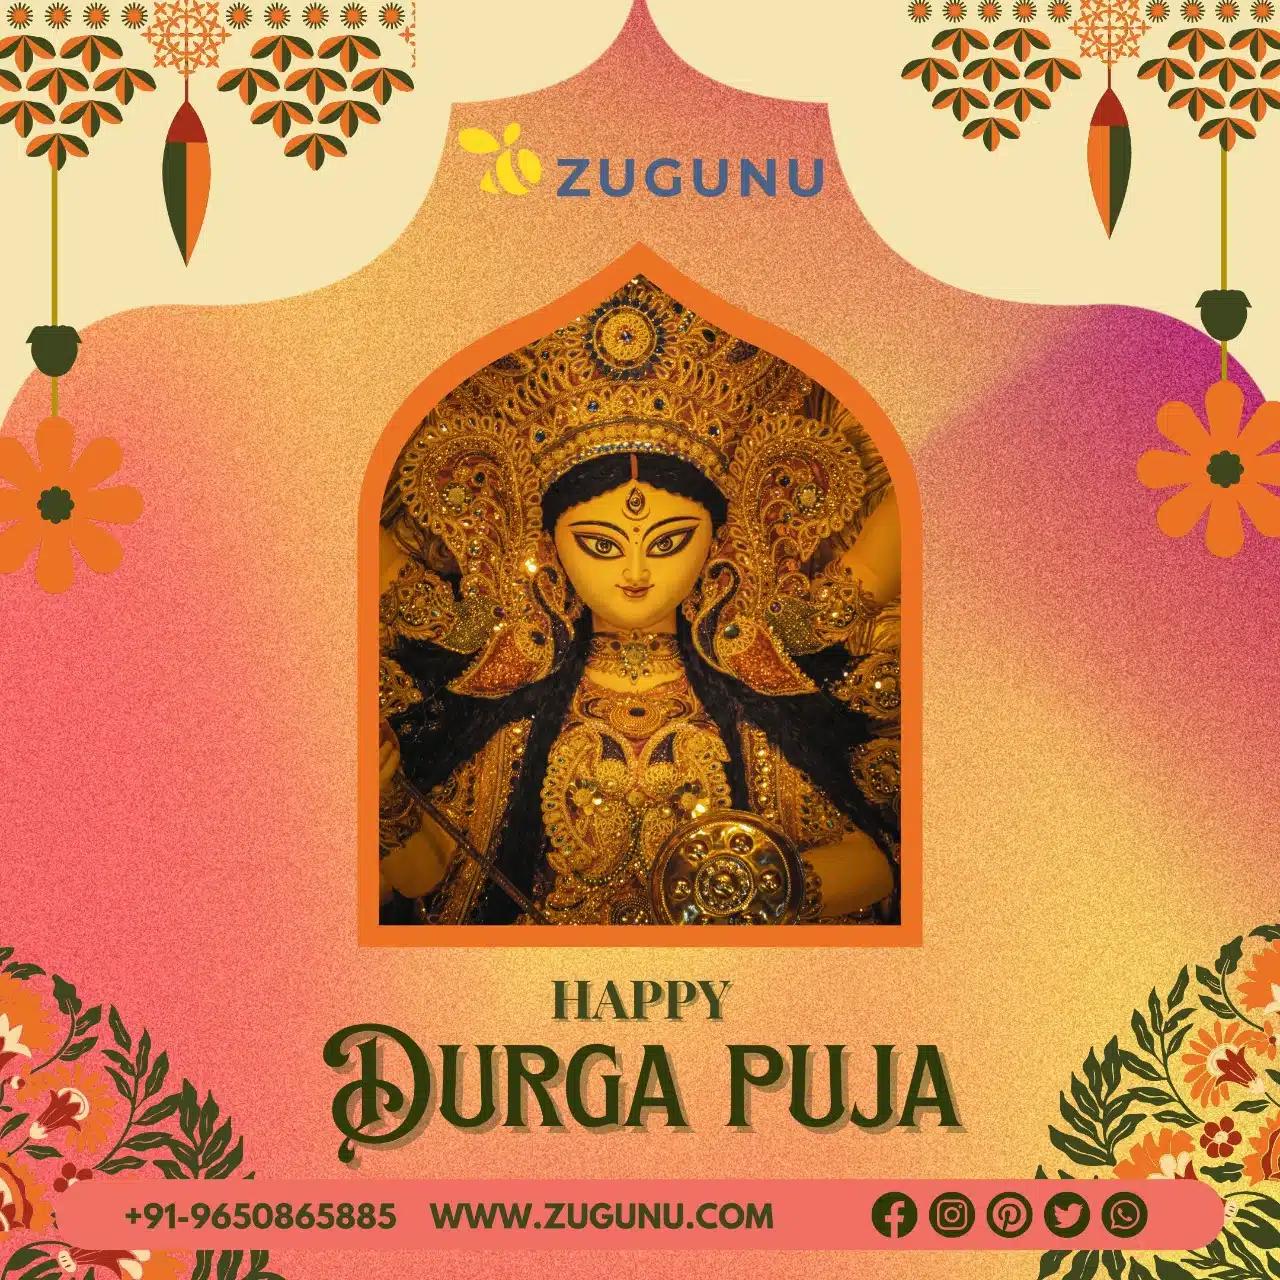 Happy Durga Puja